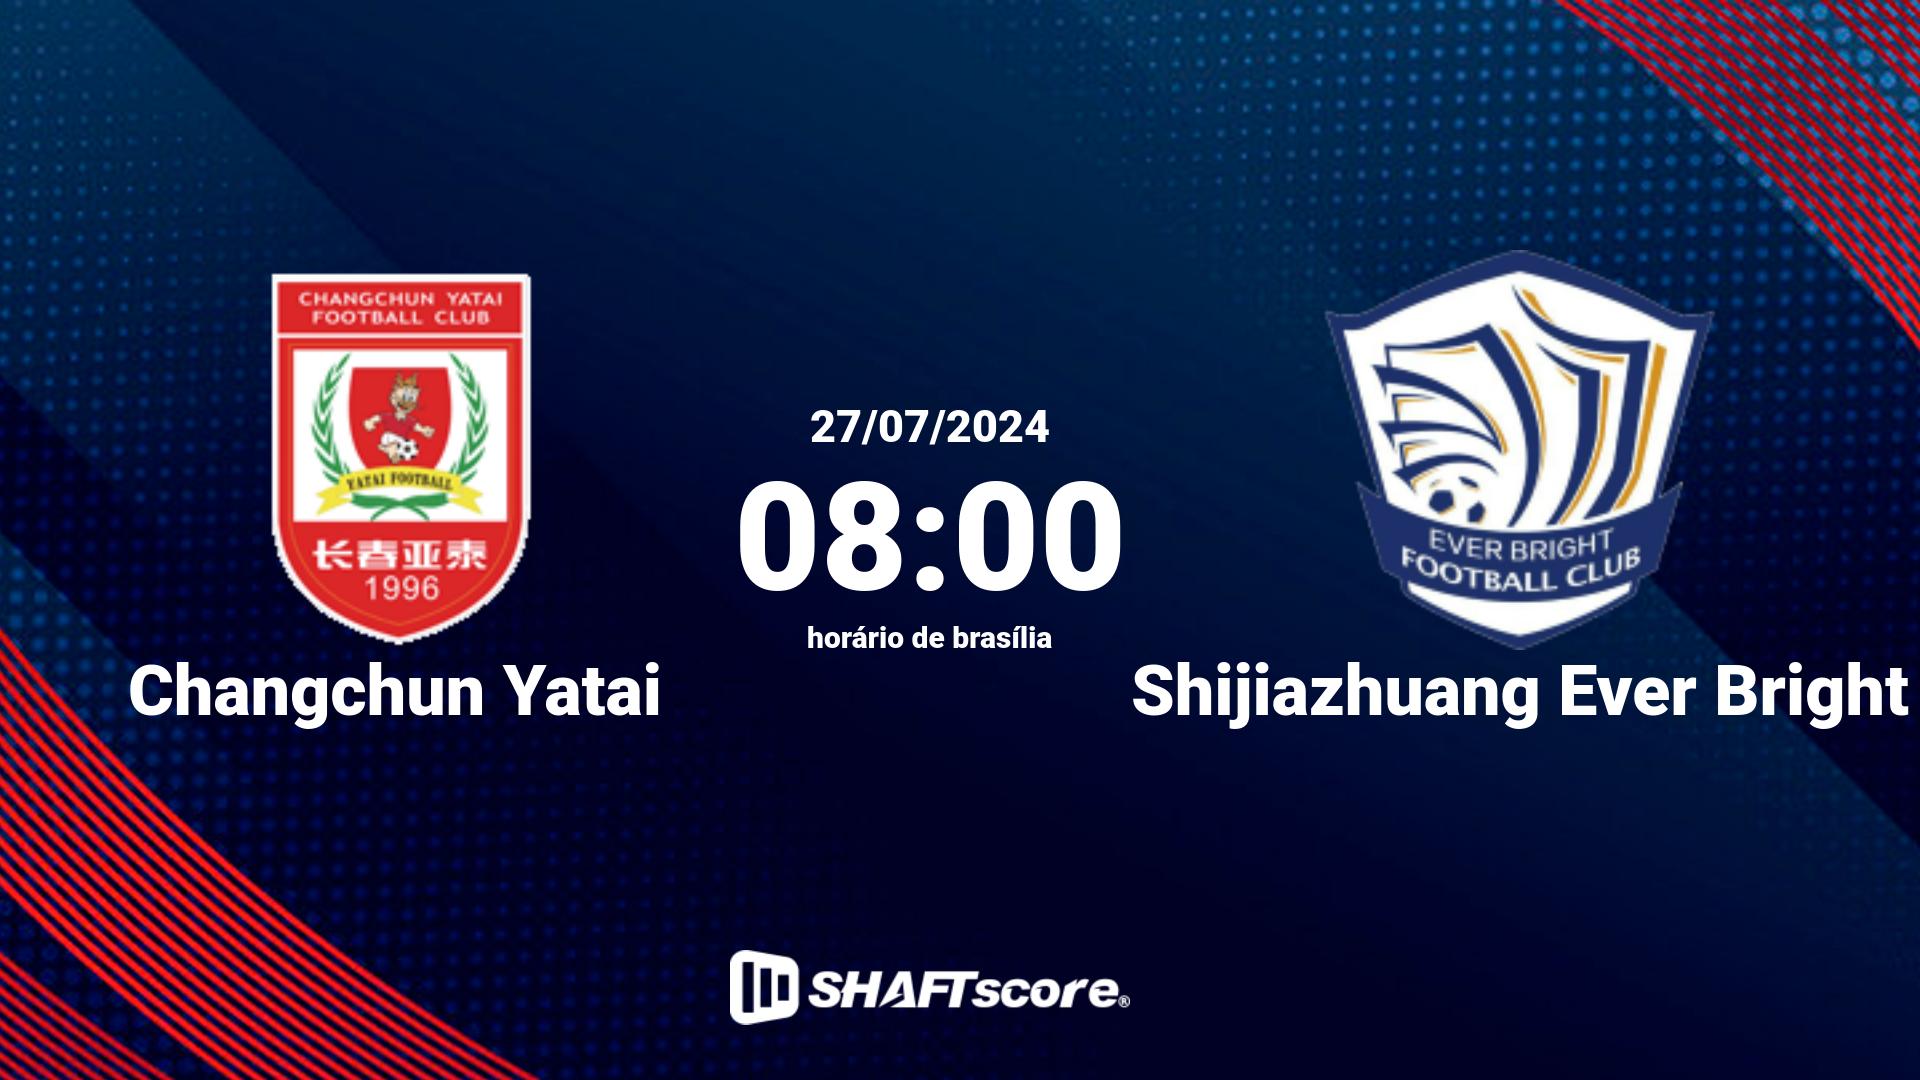 Estatísticas do jogo Changchun Yatai vs Shijiazhuang Ever Bright 27.07 08:00